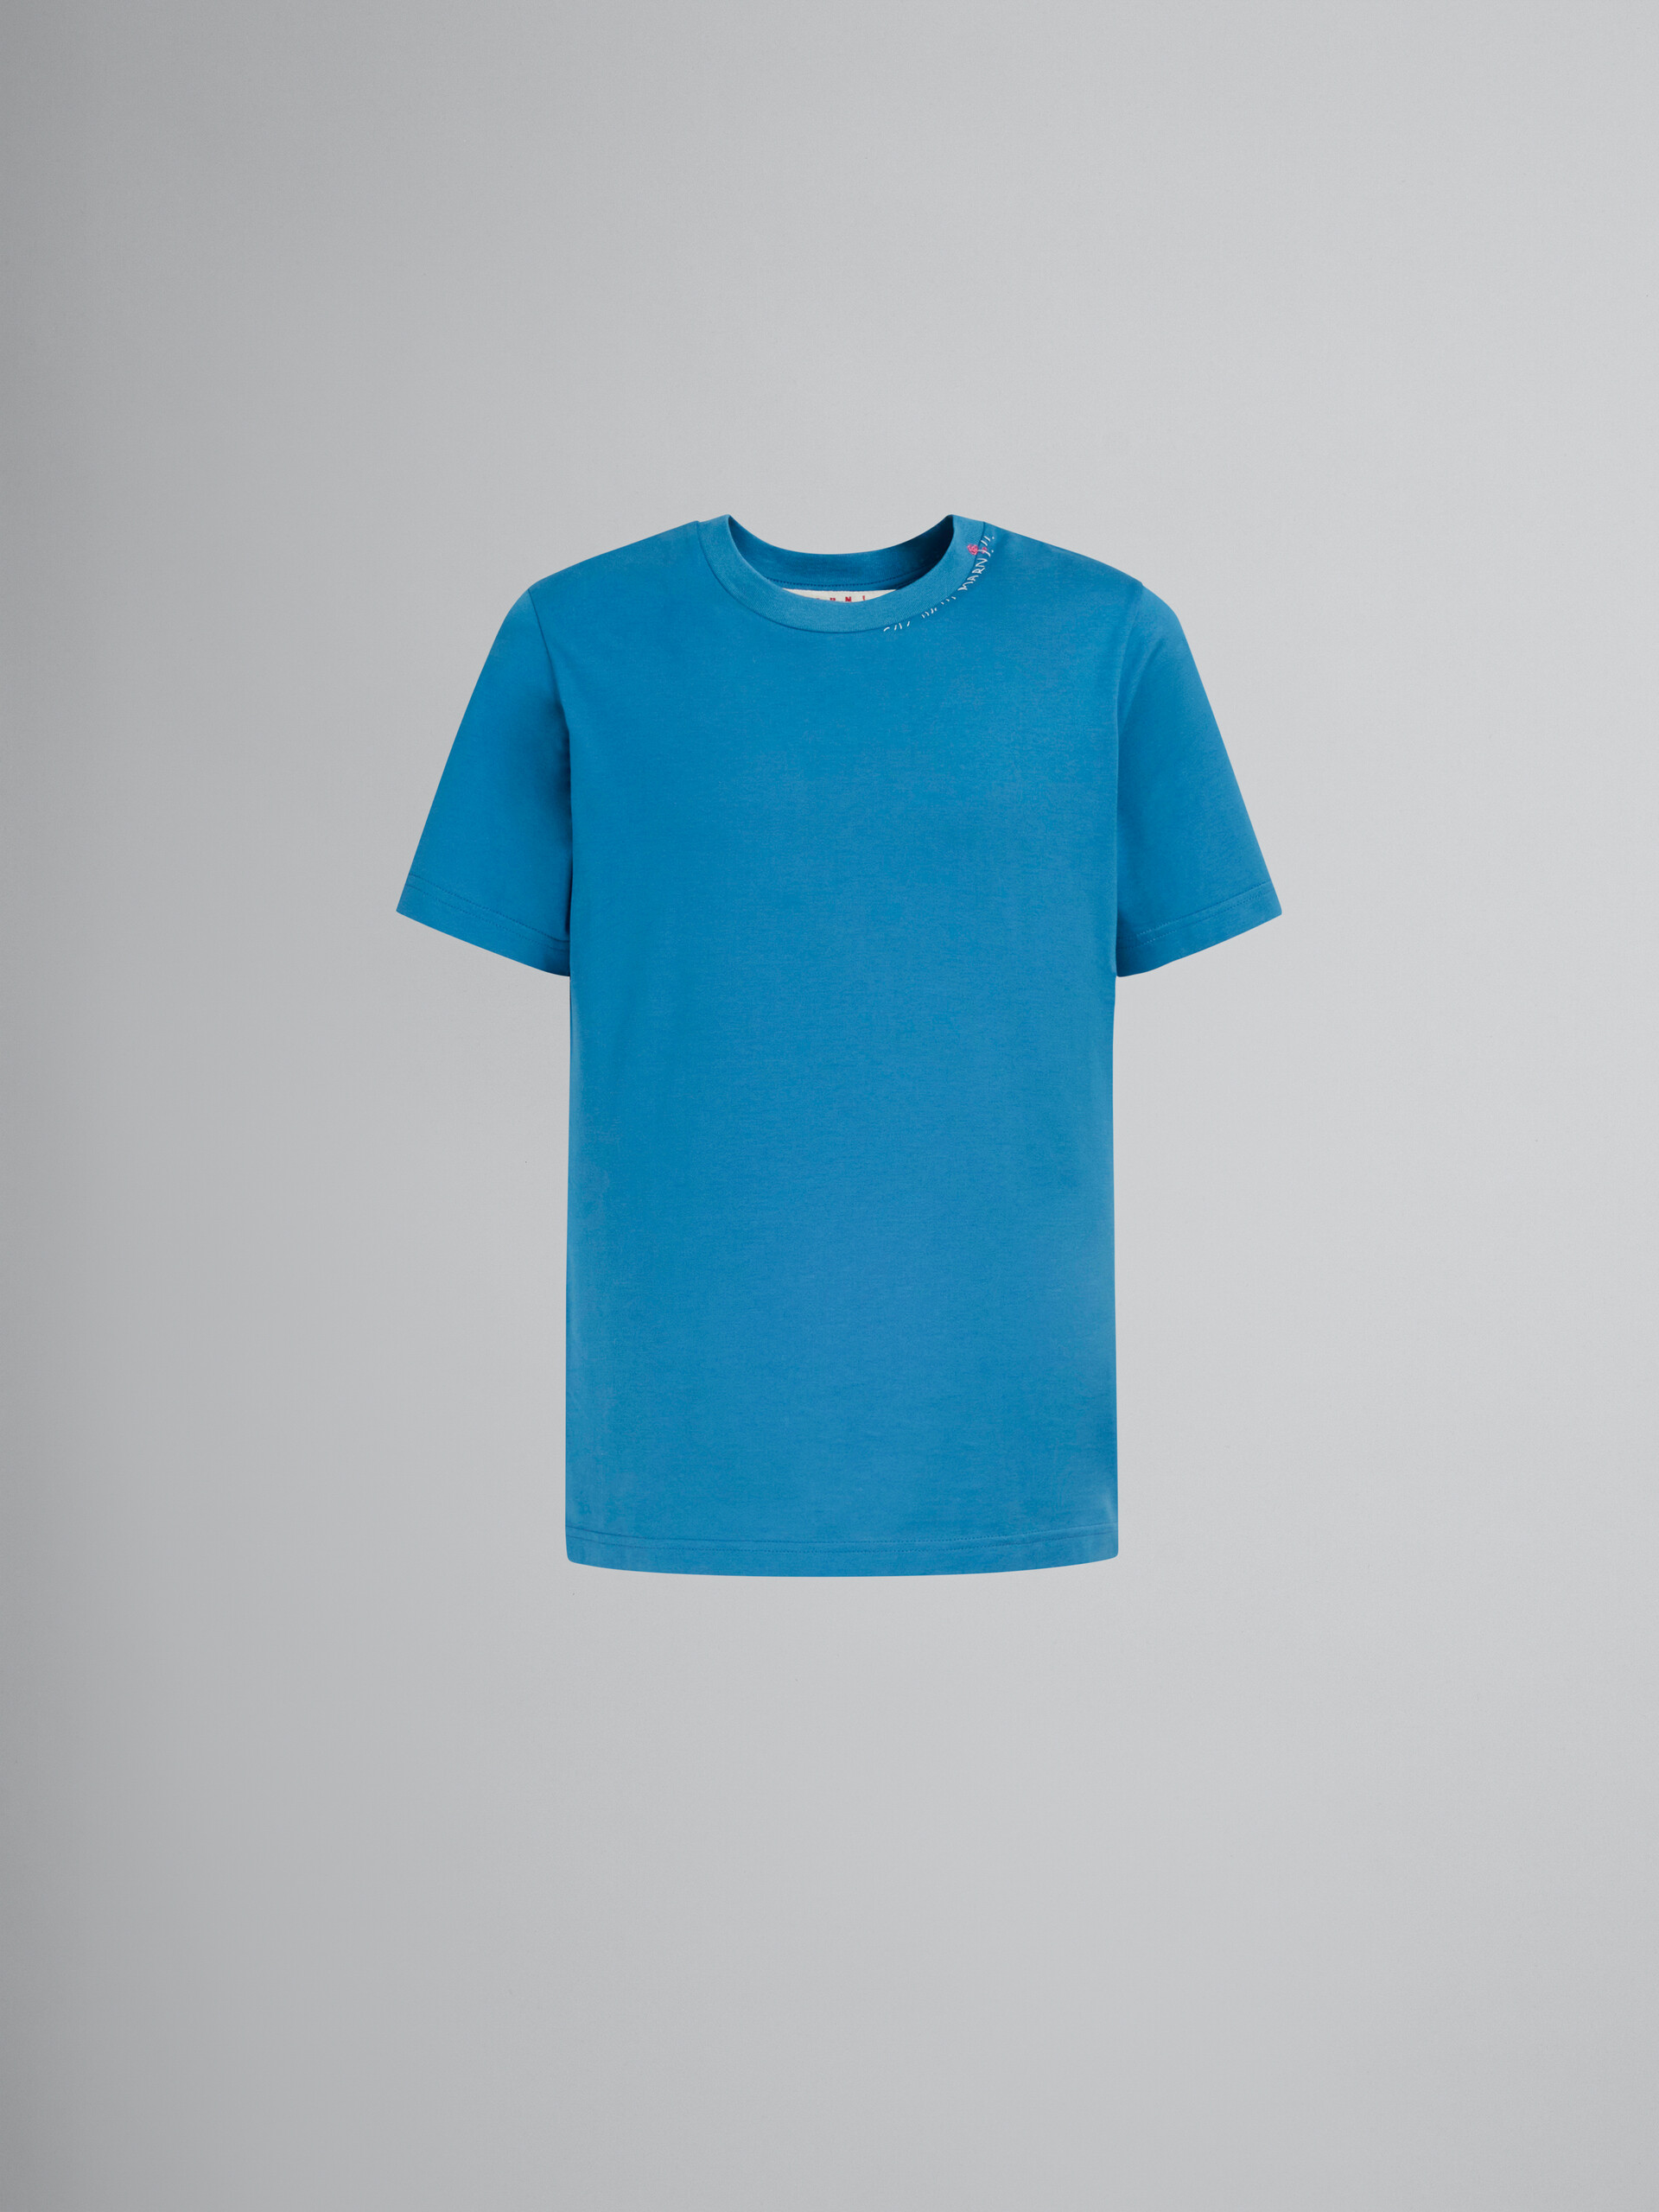 T-shirt in cotone blu con stampa nera a fiori - T-shirt - Image 1